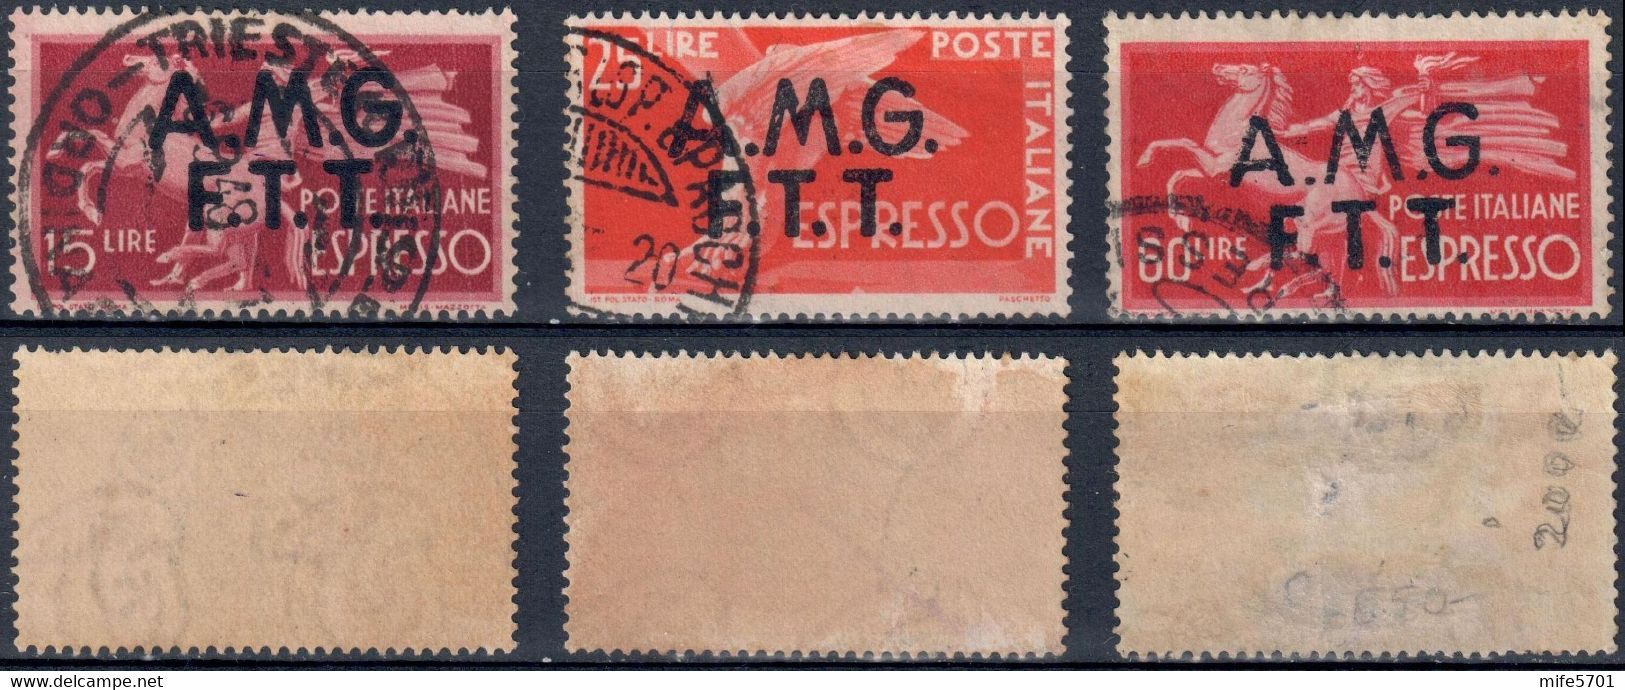 AMG-FTT 1947/48 - ESPRESSI SERIE DEMOCRATICA L. 15 / 25 / 60 SOPRASTAMPA SU DUE RIGHE - USATI - USED ⦿ - SASSONE 1/2/4 - Posta Espresso